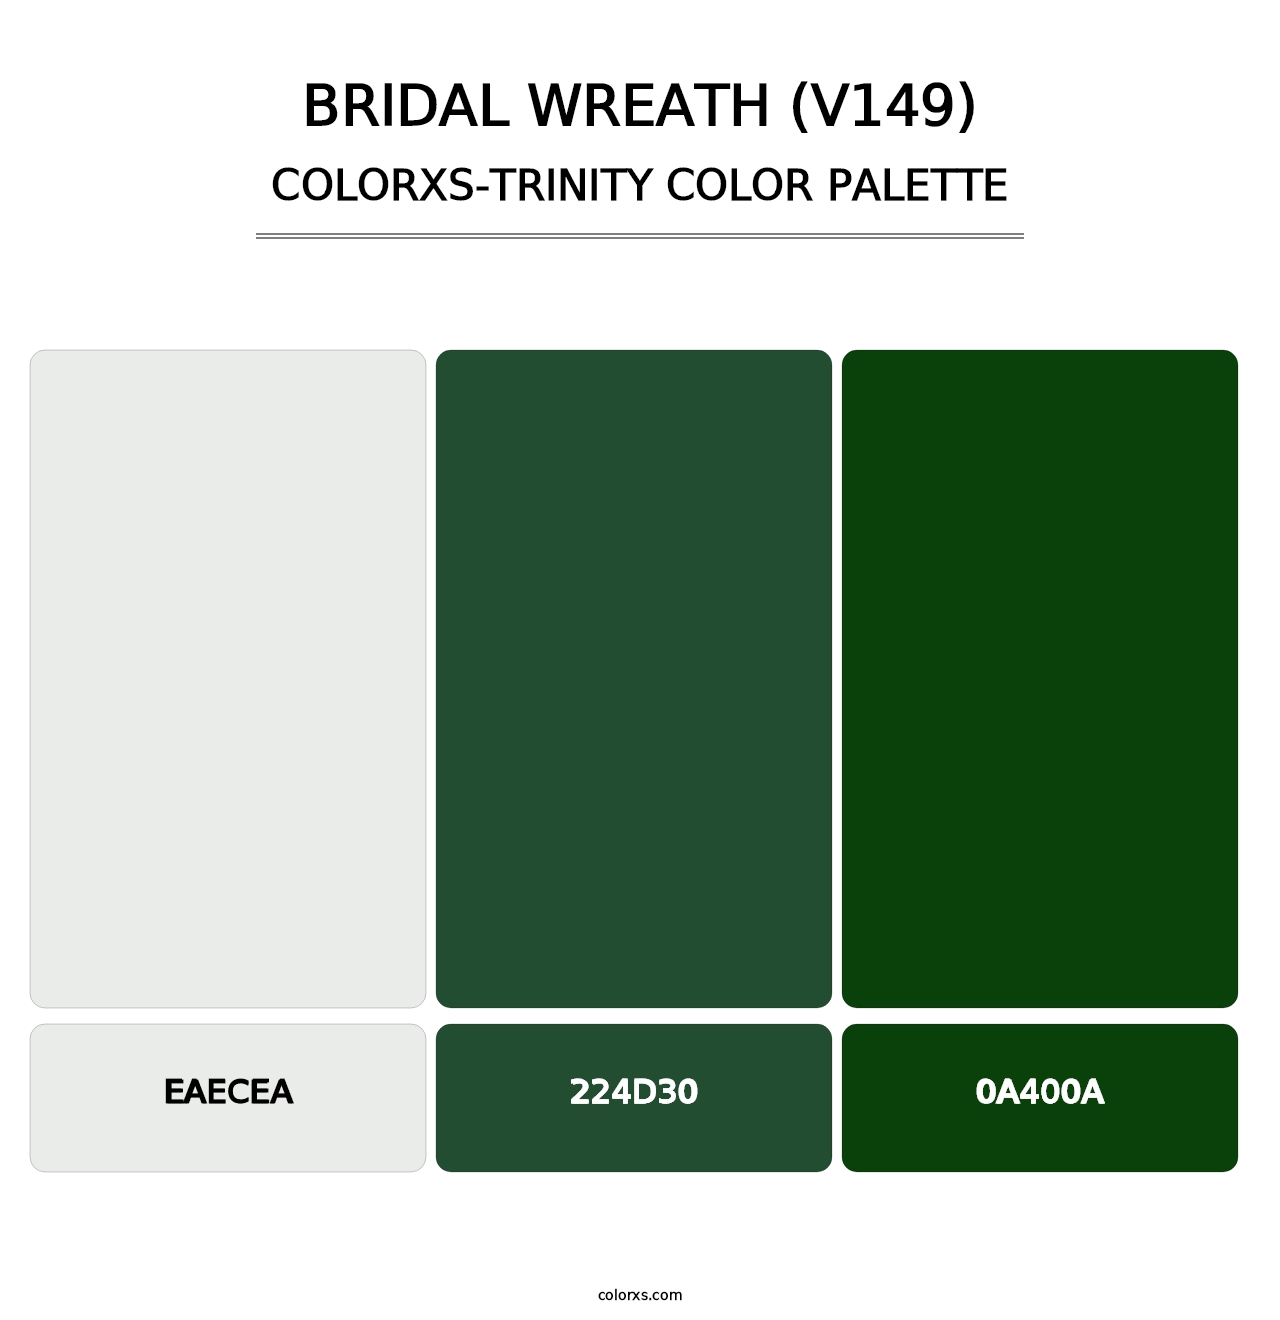 Bridal Wreath (V149) - Colorxs Trinity Palette